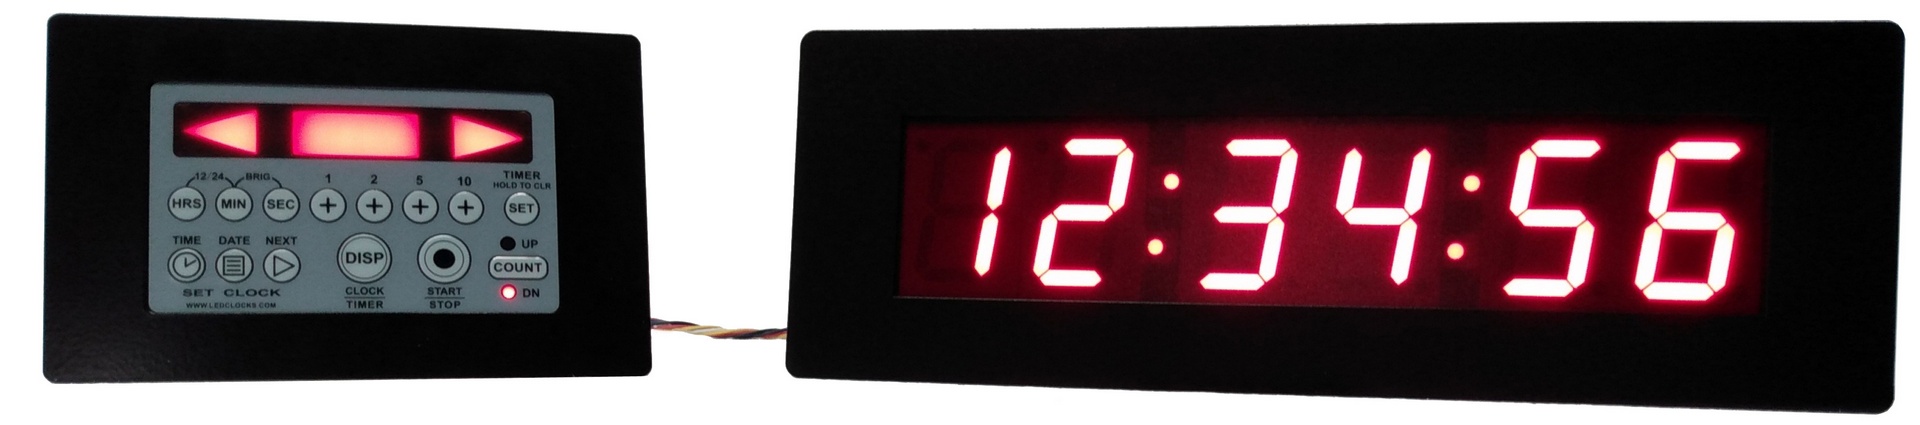 LED clock for ambulance and emergency vehicles